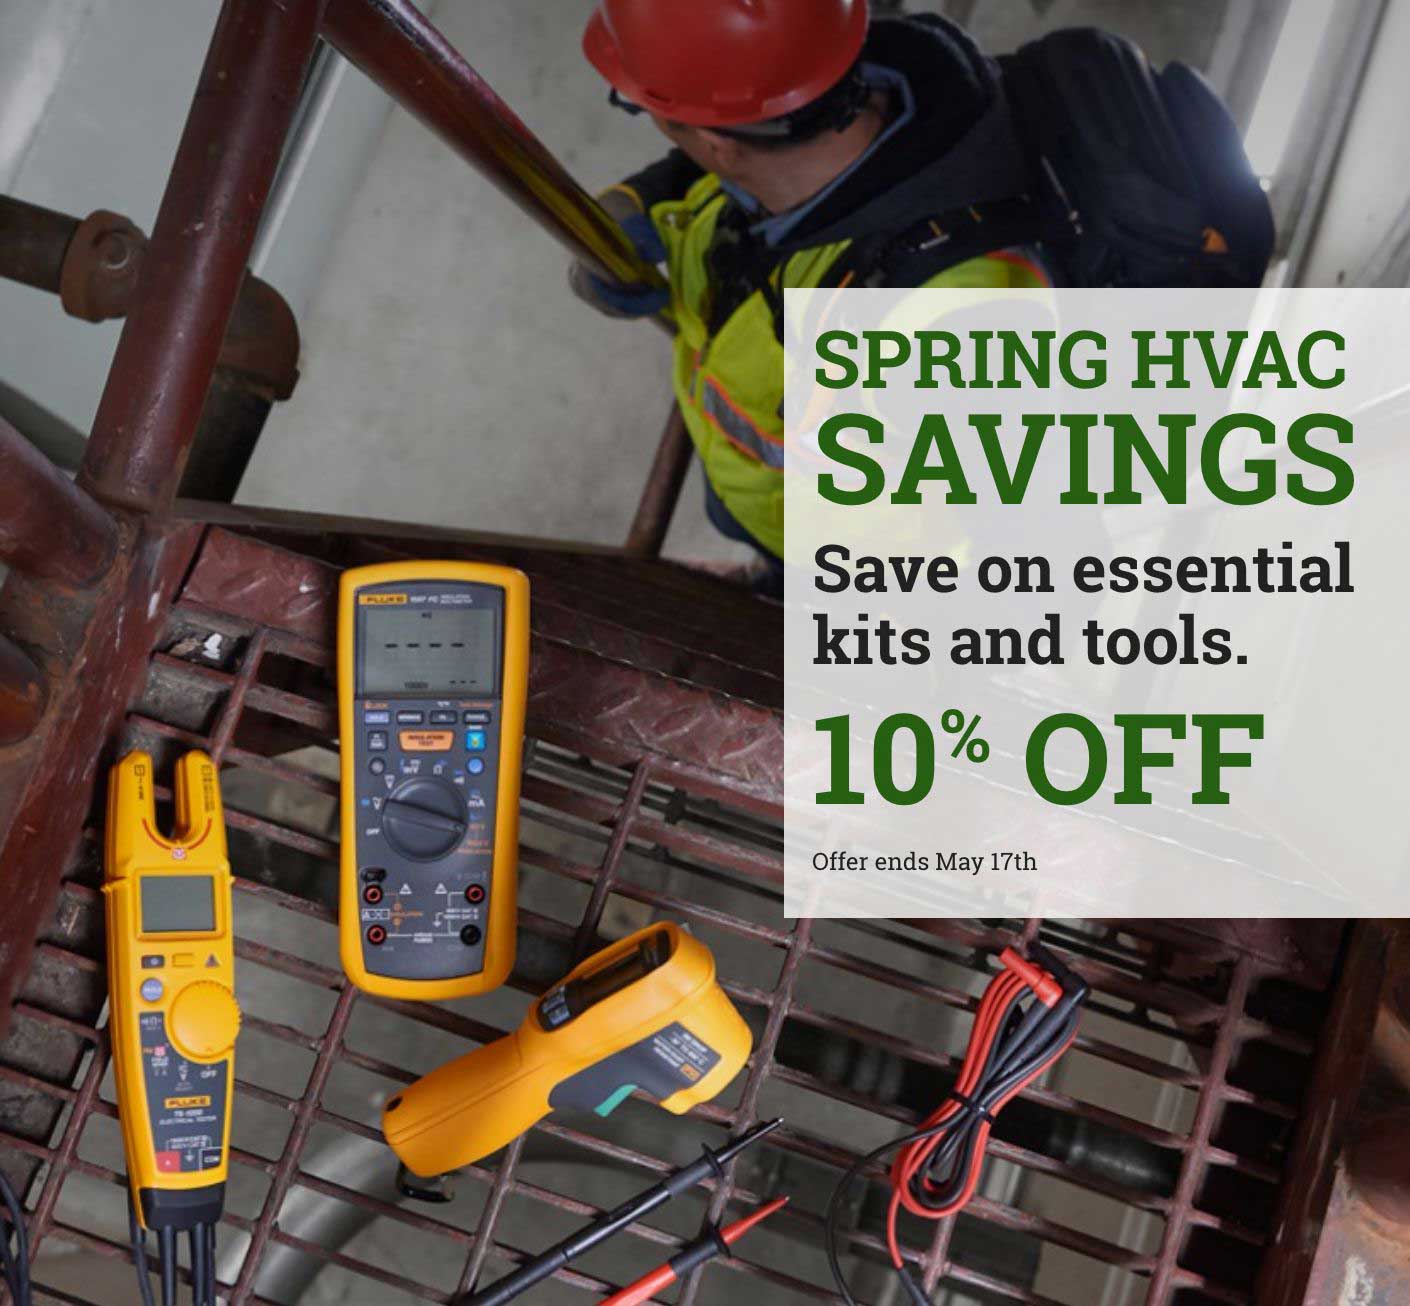 Spring HVAC Savings - 10% off essential kits and tools